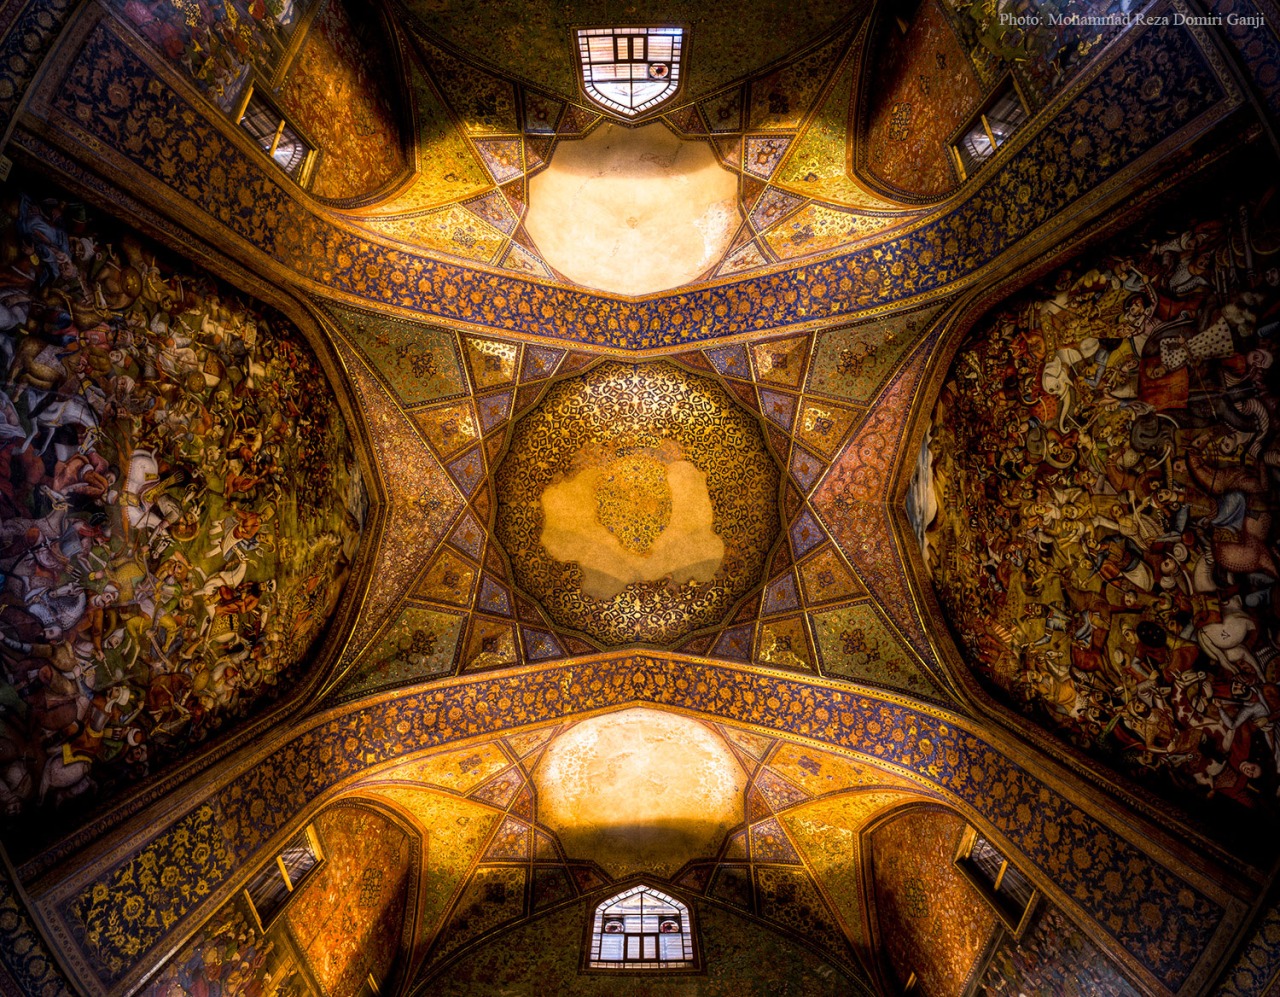 mosque-ceiling-mohammad-reza-domiri-ganji-11